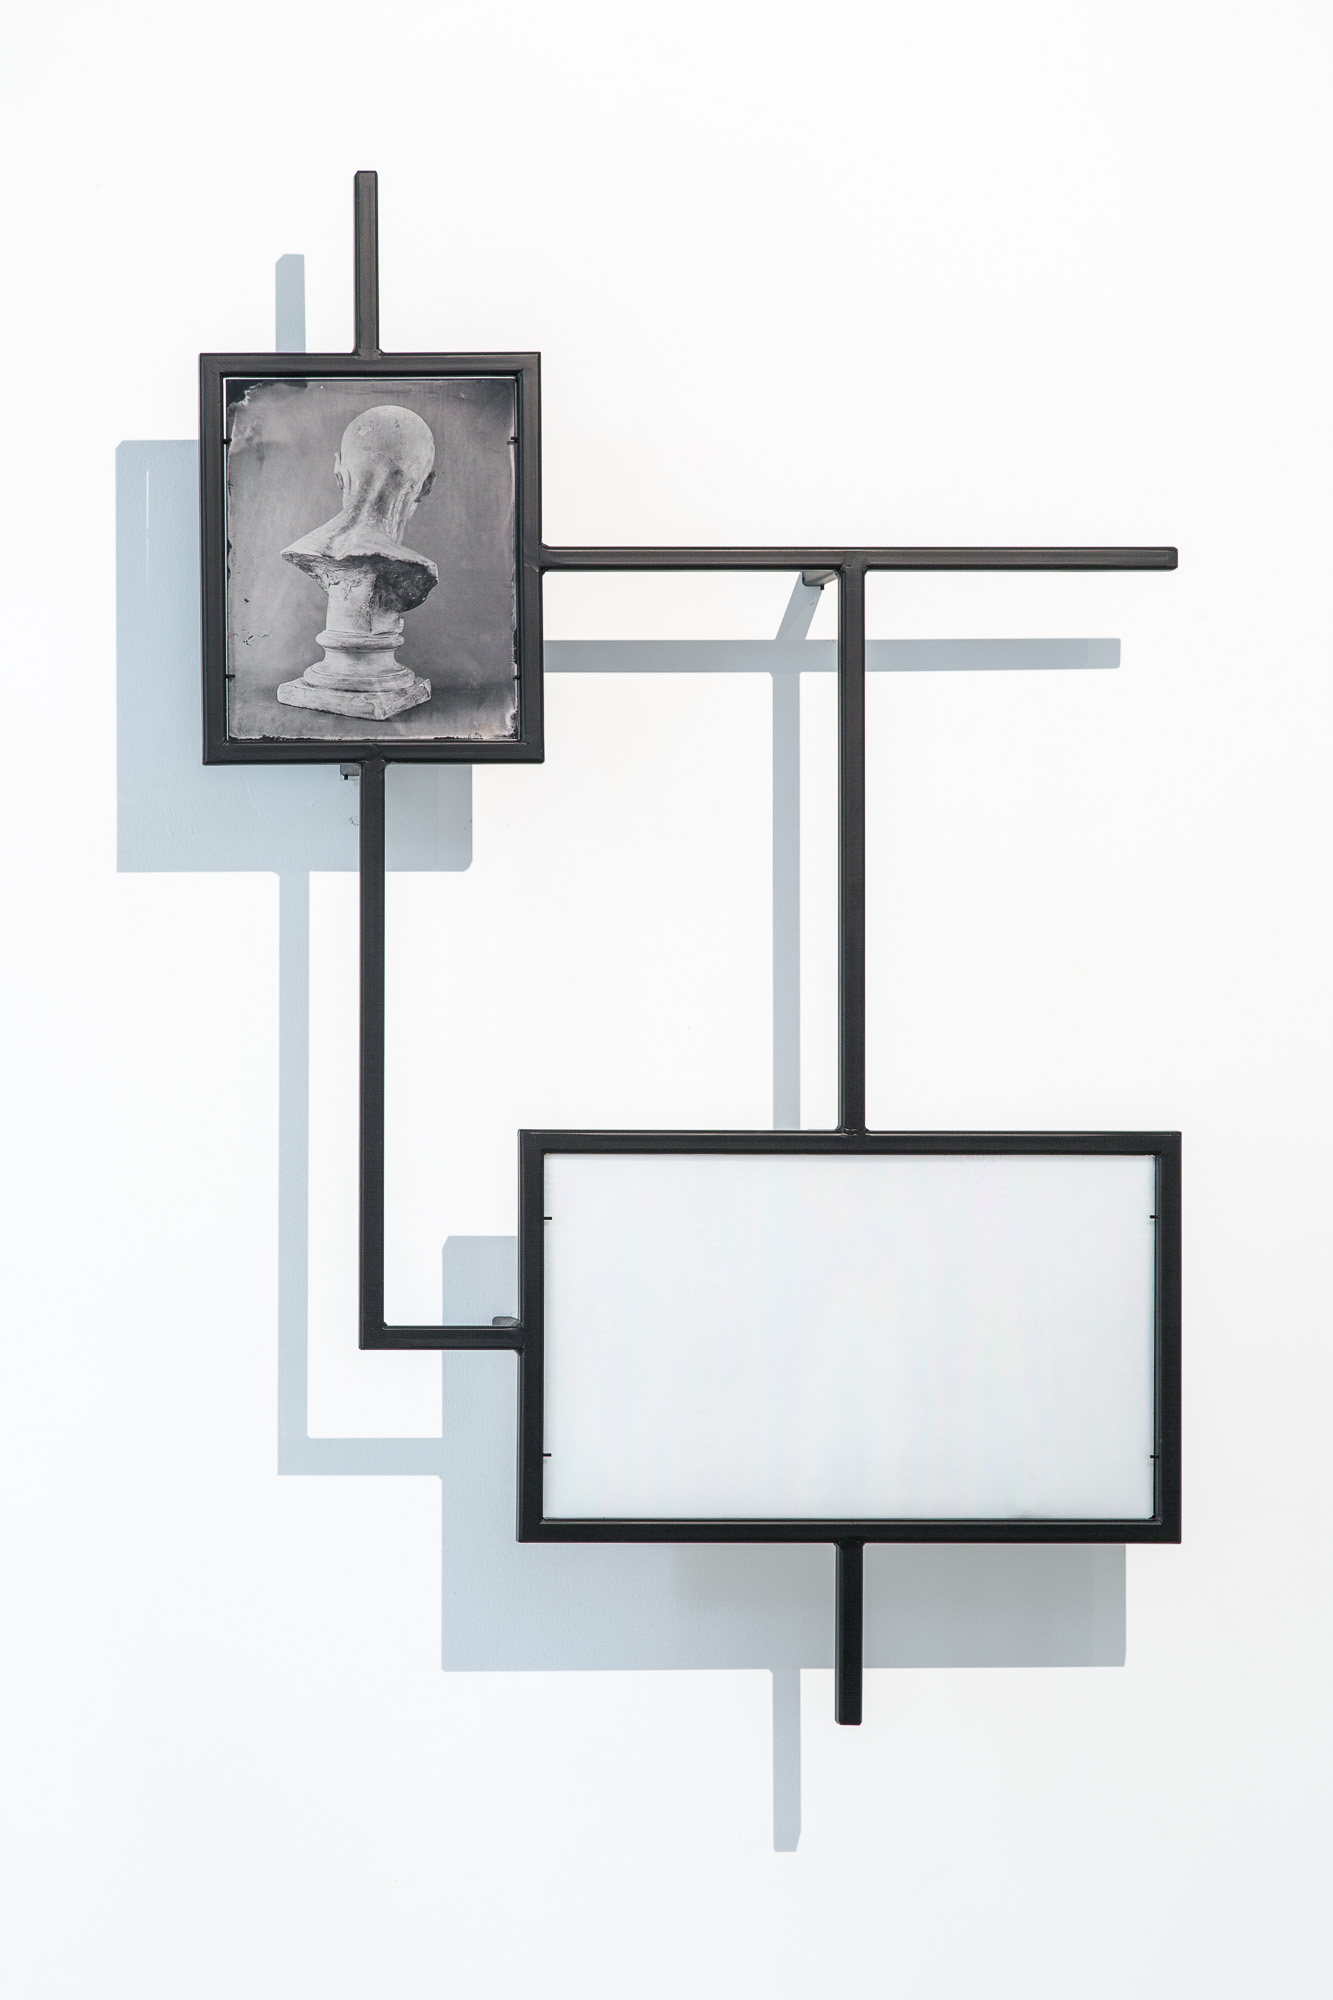 Ádám ALBERT: SKB, 2017, ambrotype, glass, iron, 81 x 128 x 13 cm